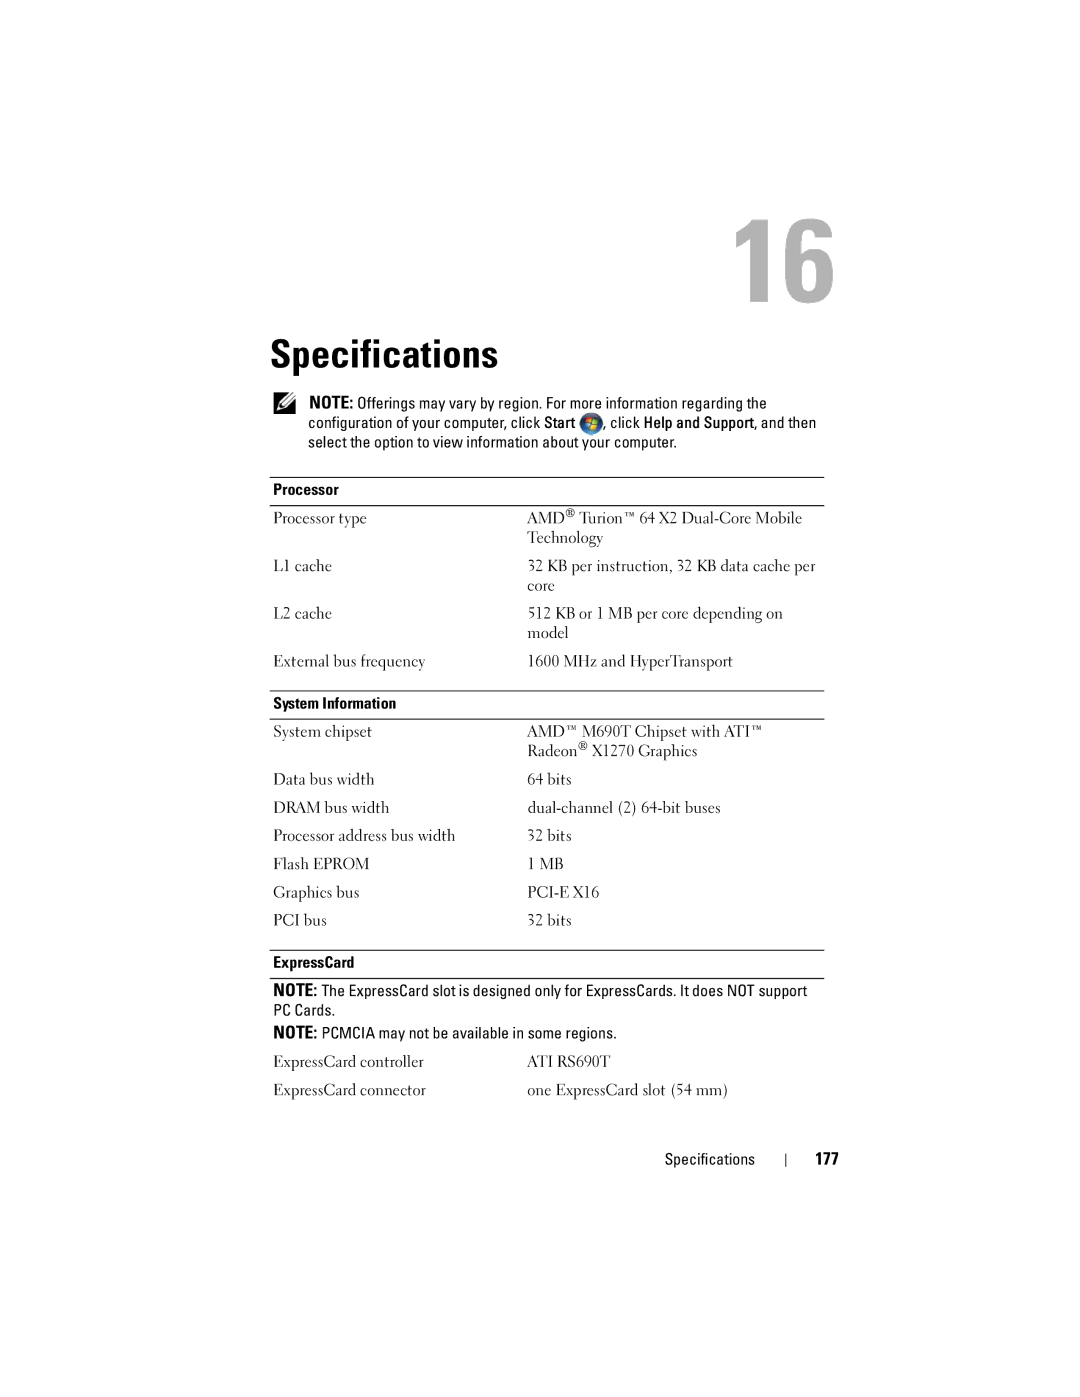 Dell GU051 manual Specifications, 177 